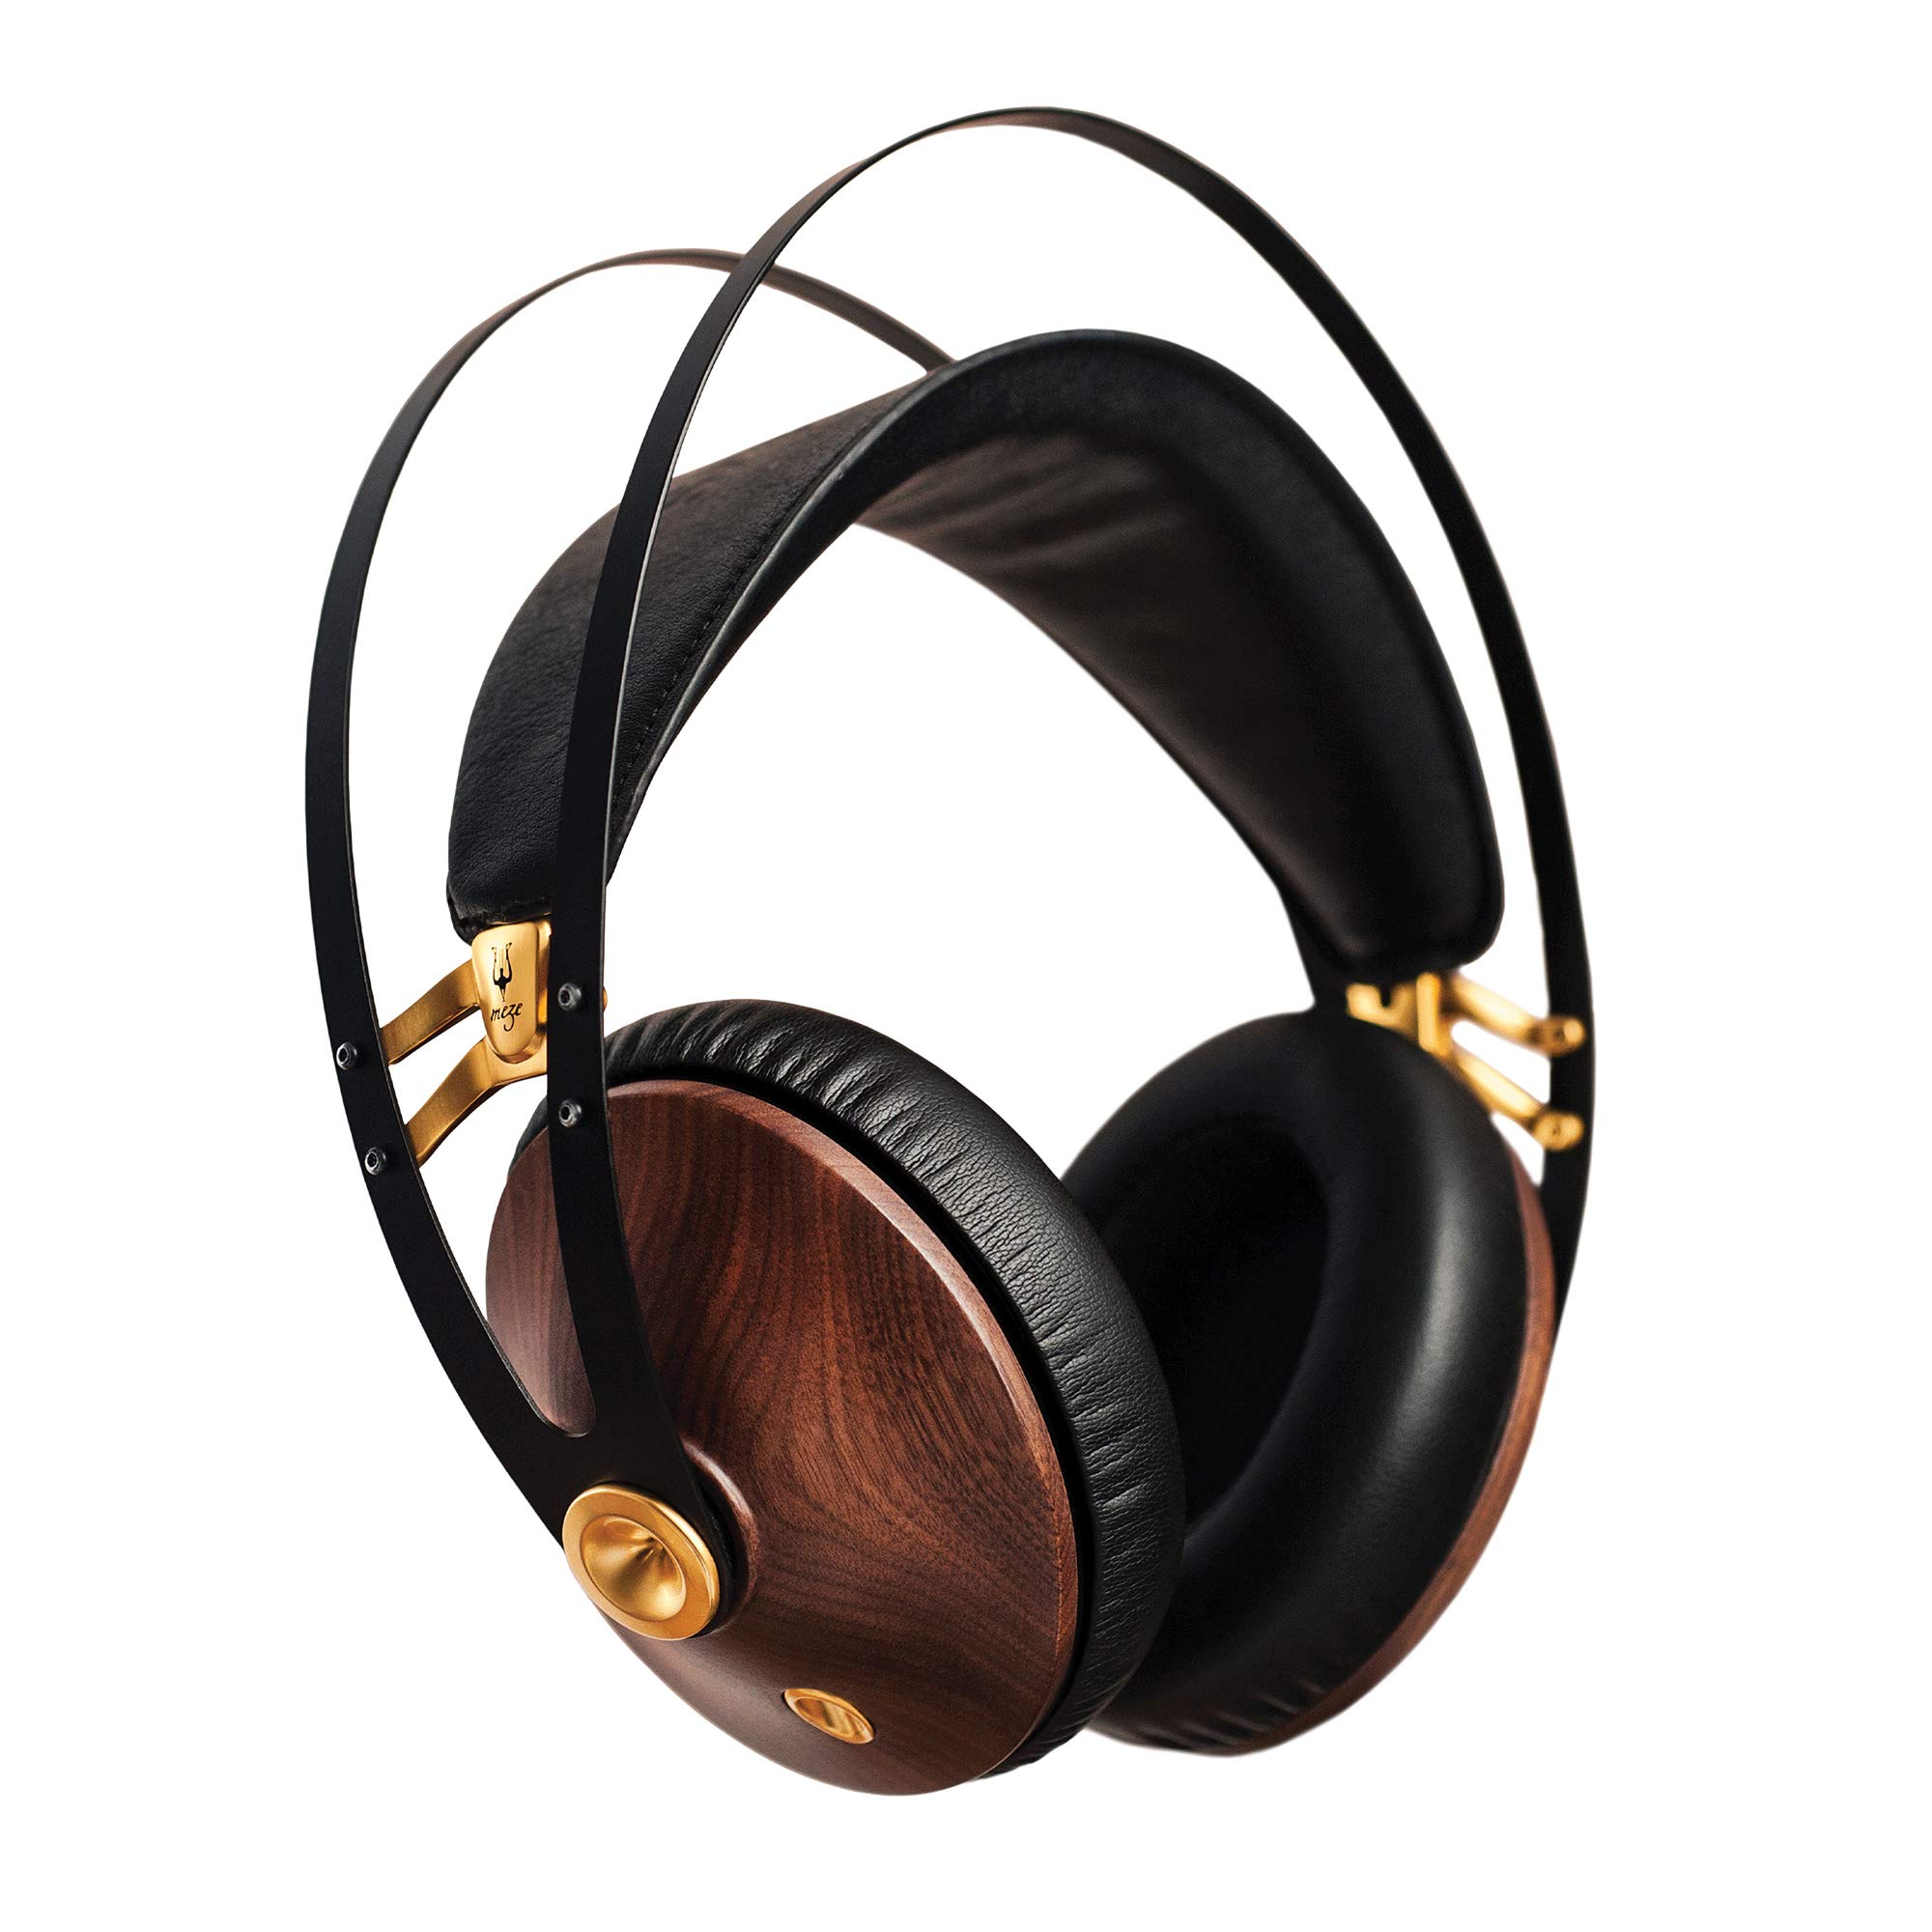 Meze Headphones Meze 99 Classics Walnussgold | Kabelgebundene Over-Ear-Kopfhörer mit Mikrofon und selbstverstellbarem Kopfbügel | Klassisches geschlossenes Holz-Headset für Audiophile